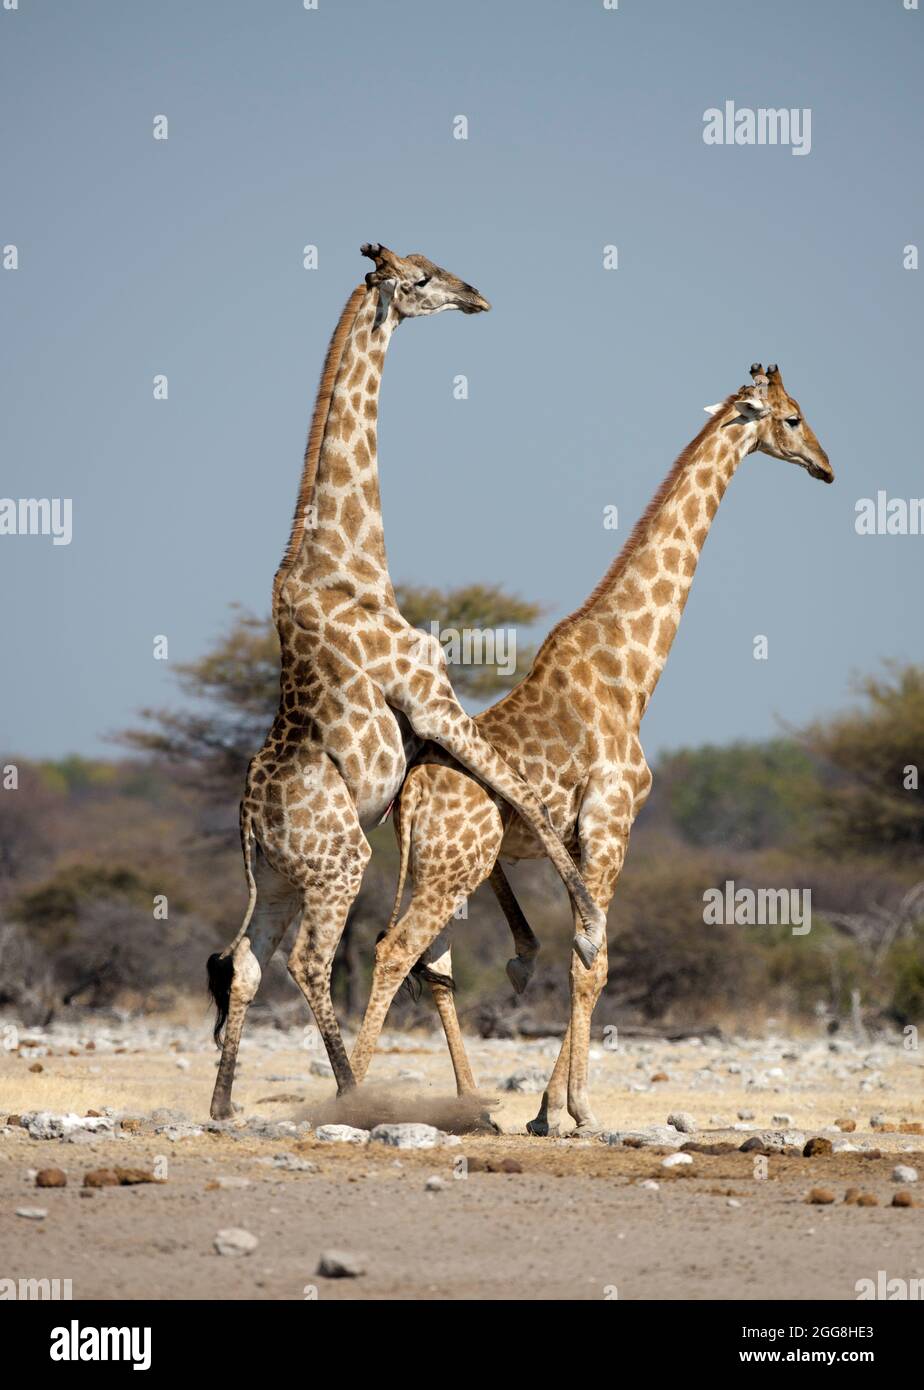 Giraffe mating in Etosha National Park,Namibia.Africa Stock Photo - Alamy